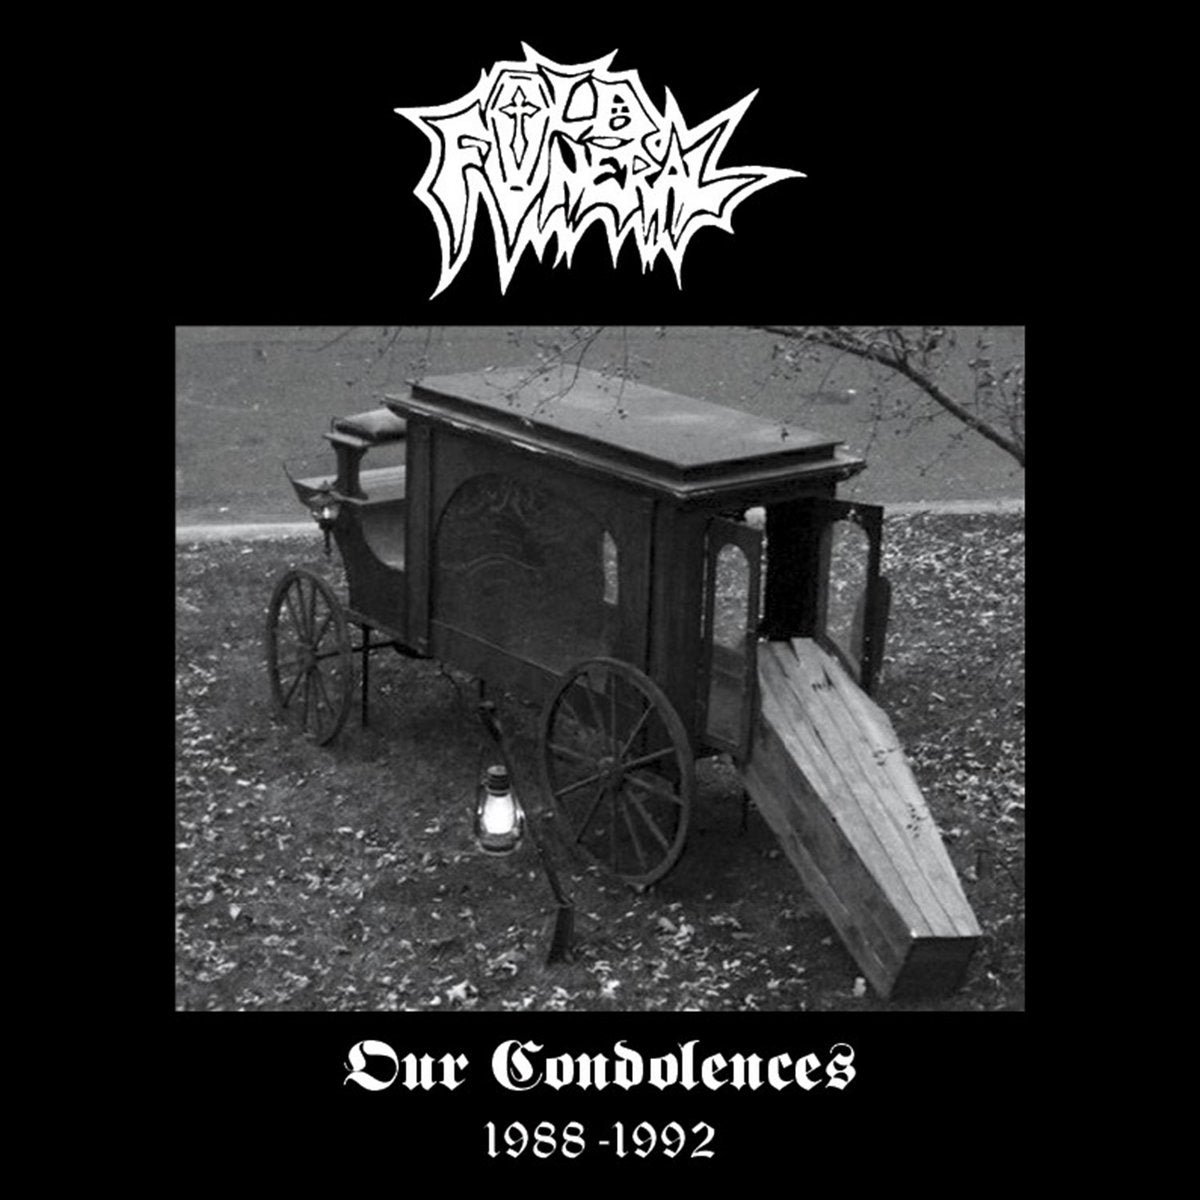 Old Funeral - Our Condolences 2LP (Gatefold Silver Vinyl)